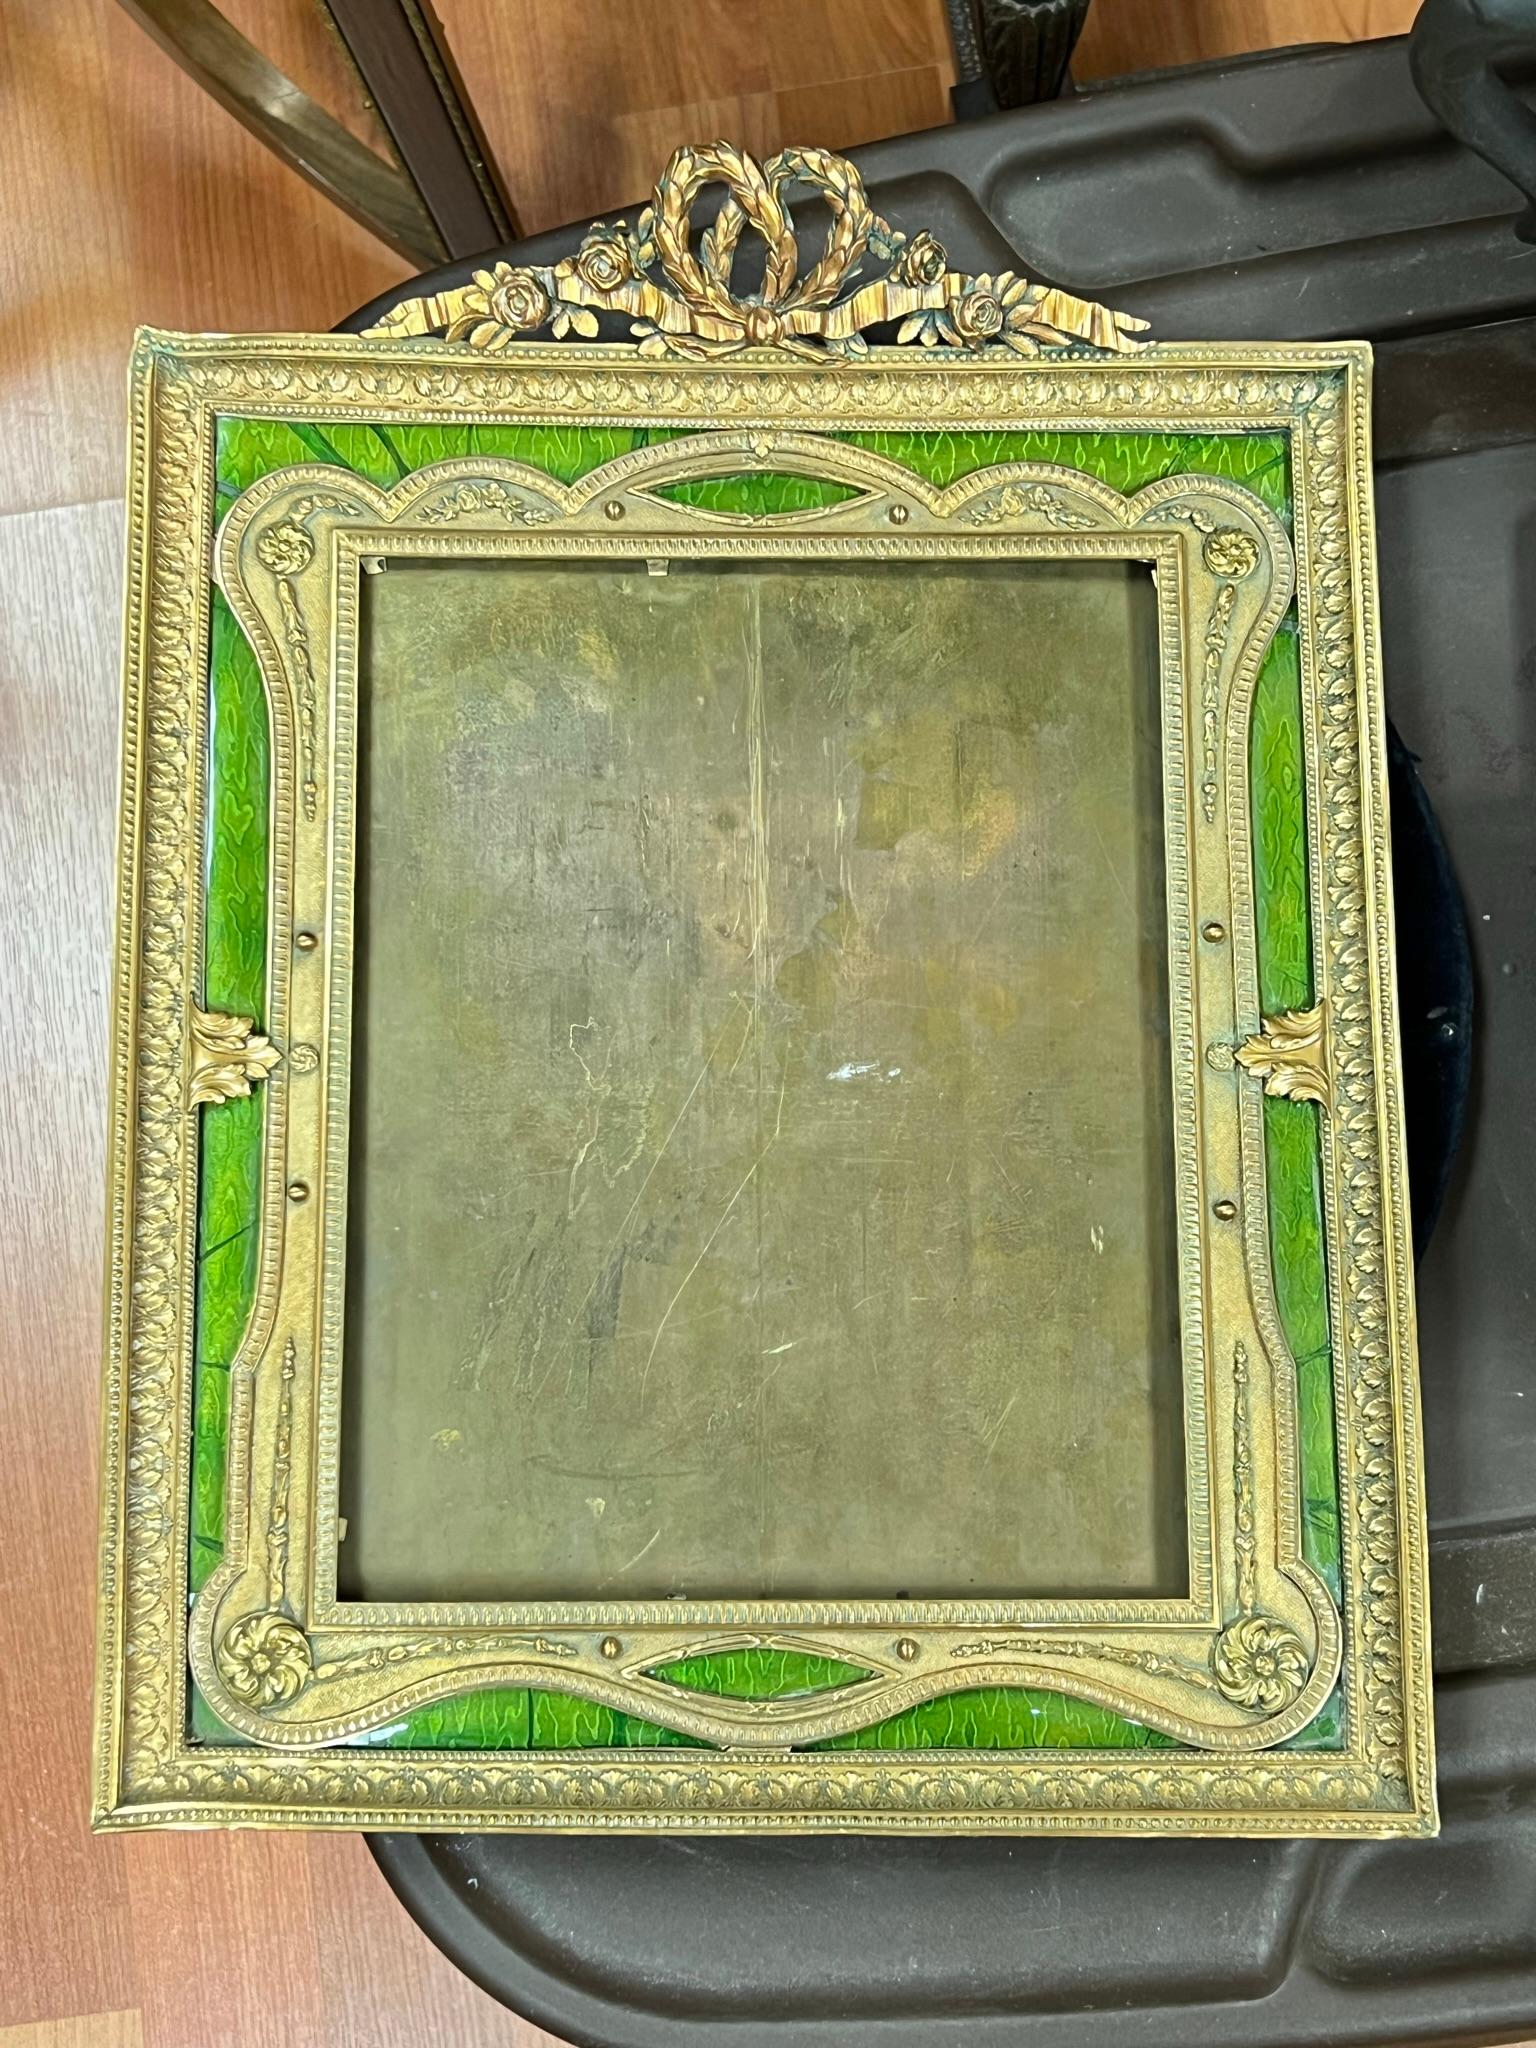 green enamel photo frame